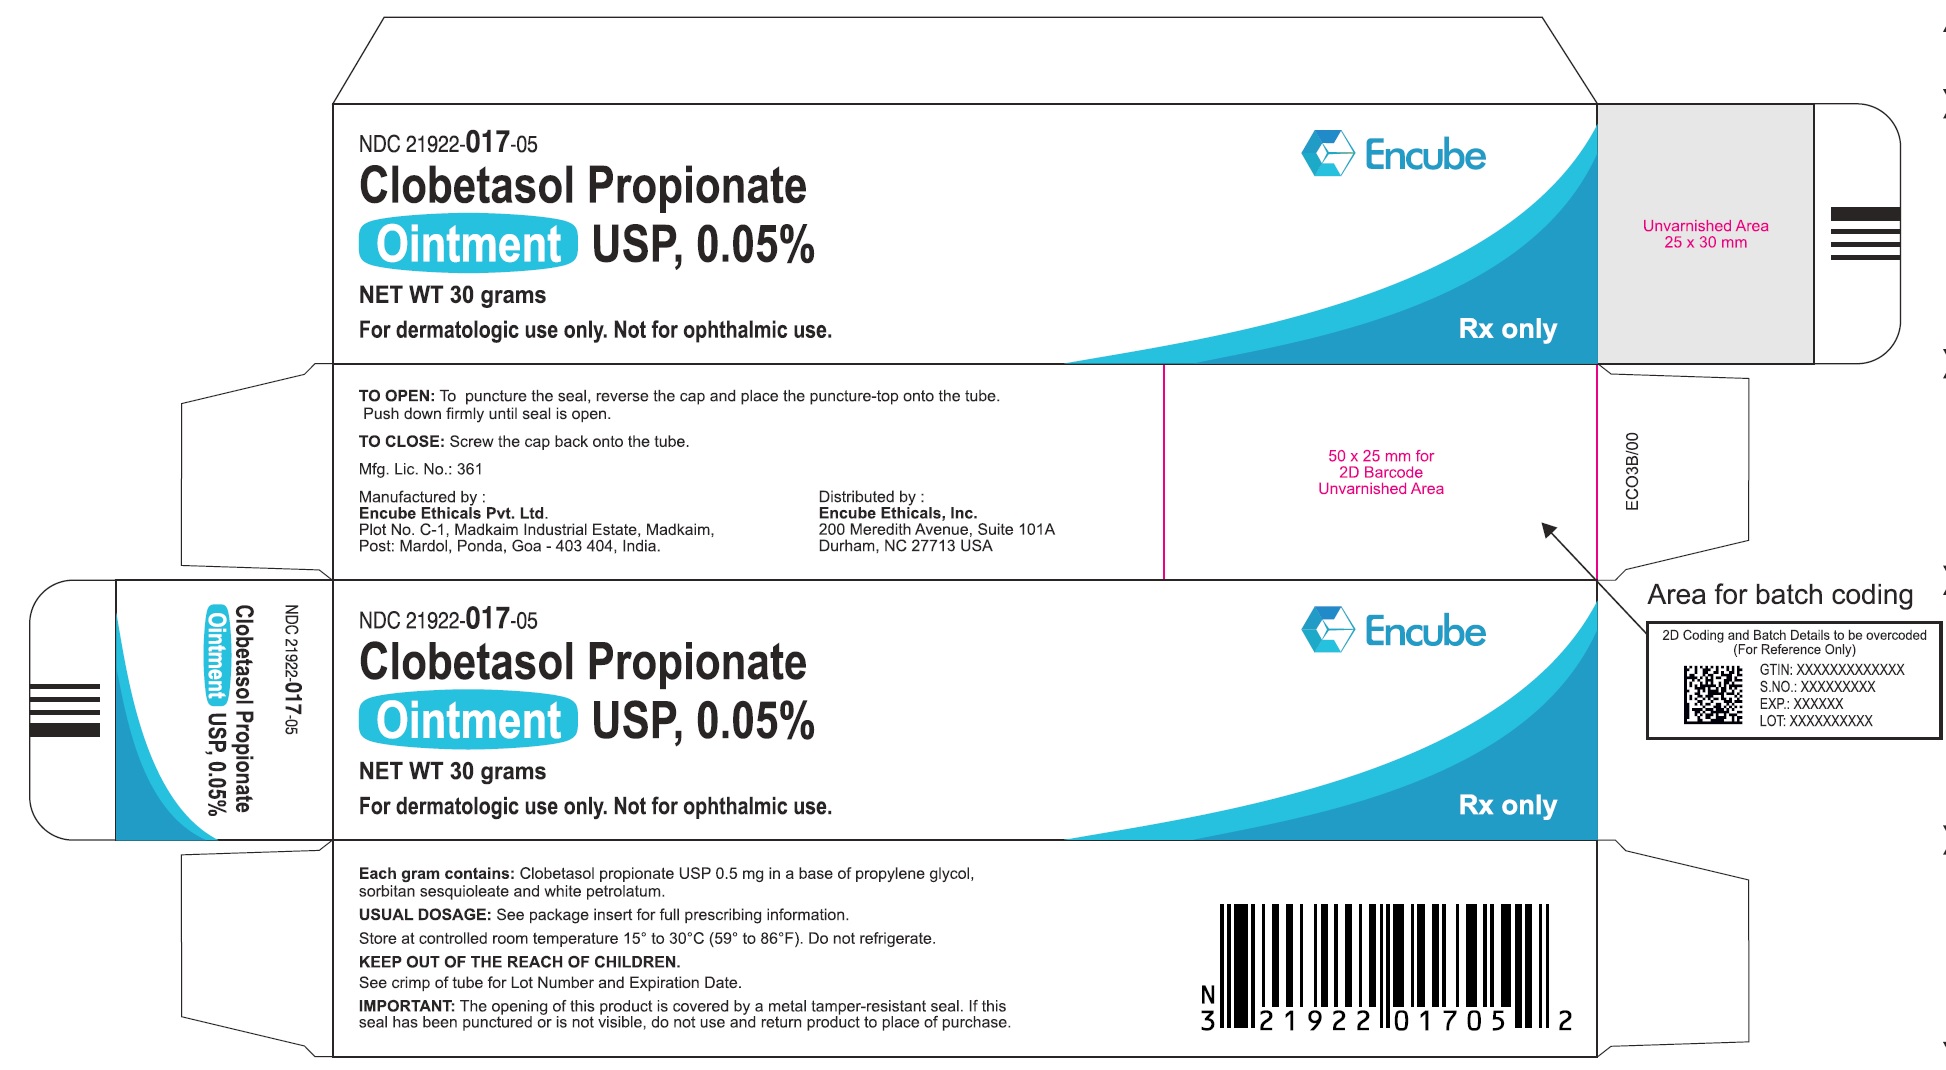 Rx Item-Clobetasol Propionate 0.05% 30 GM Oint by Encube Ethicals Gen Temovate